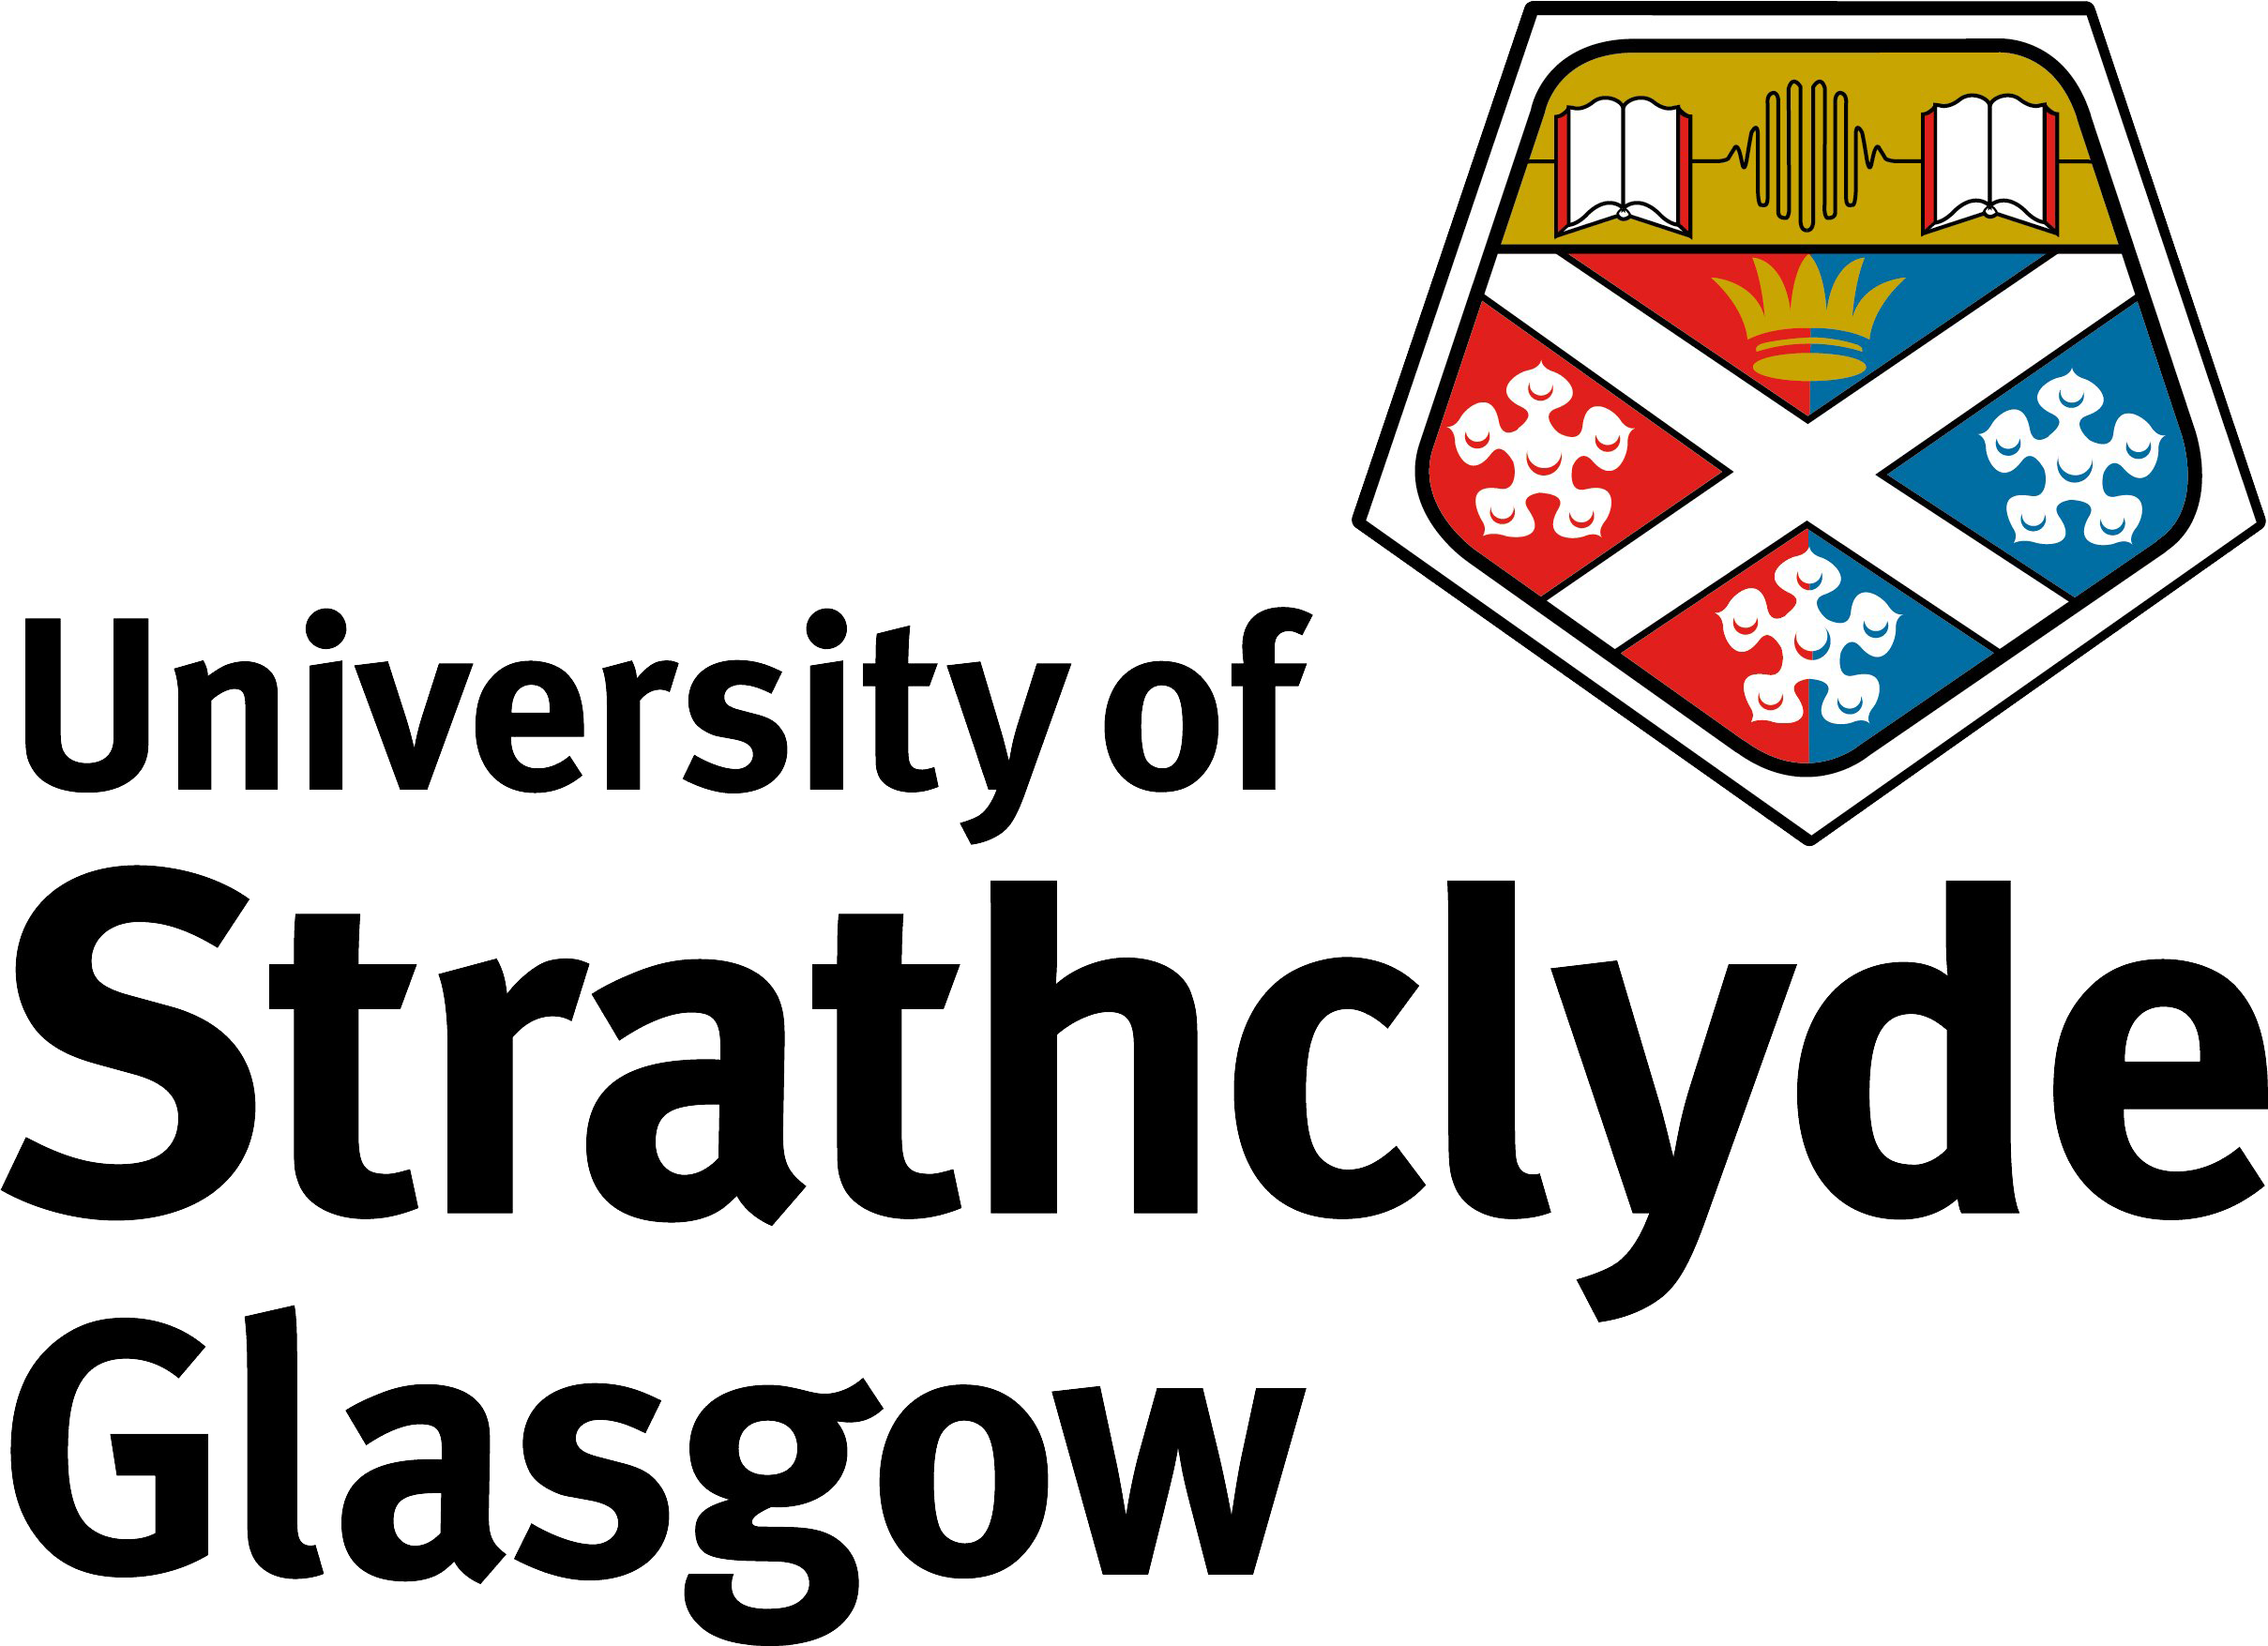 The University of Strathclyde logo logo